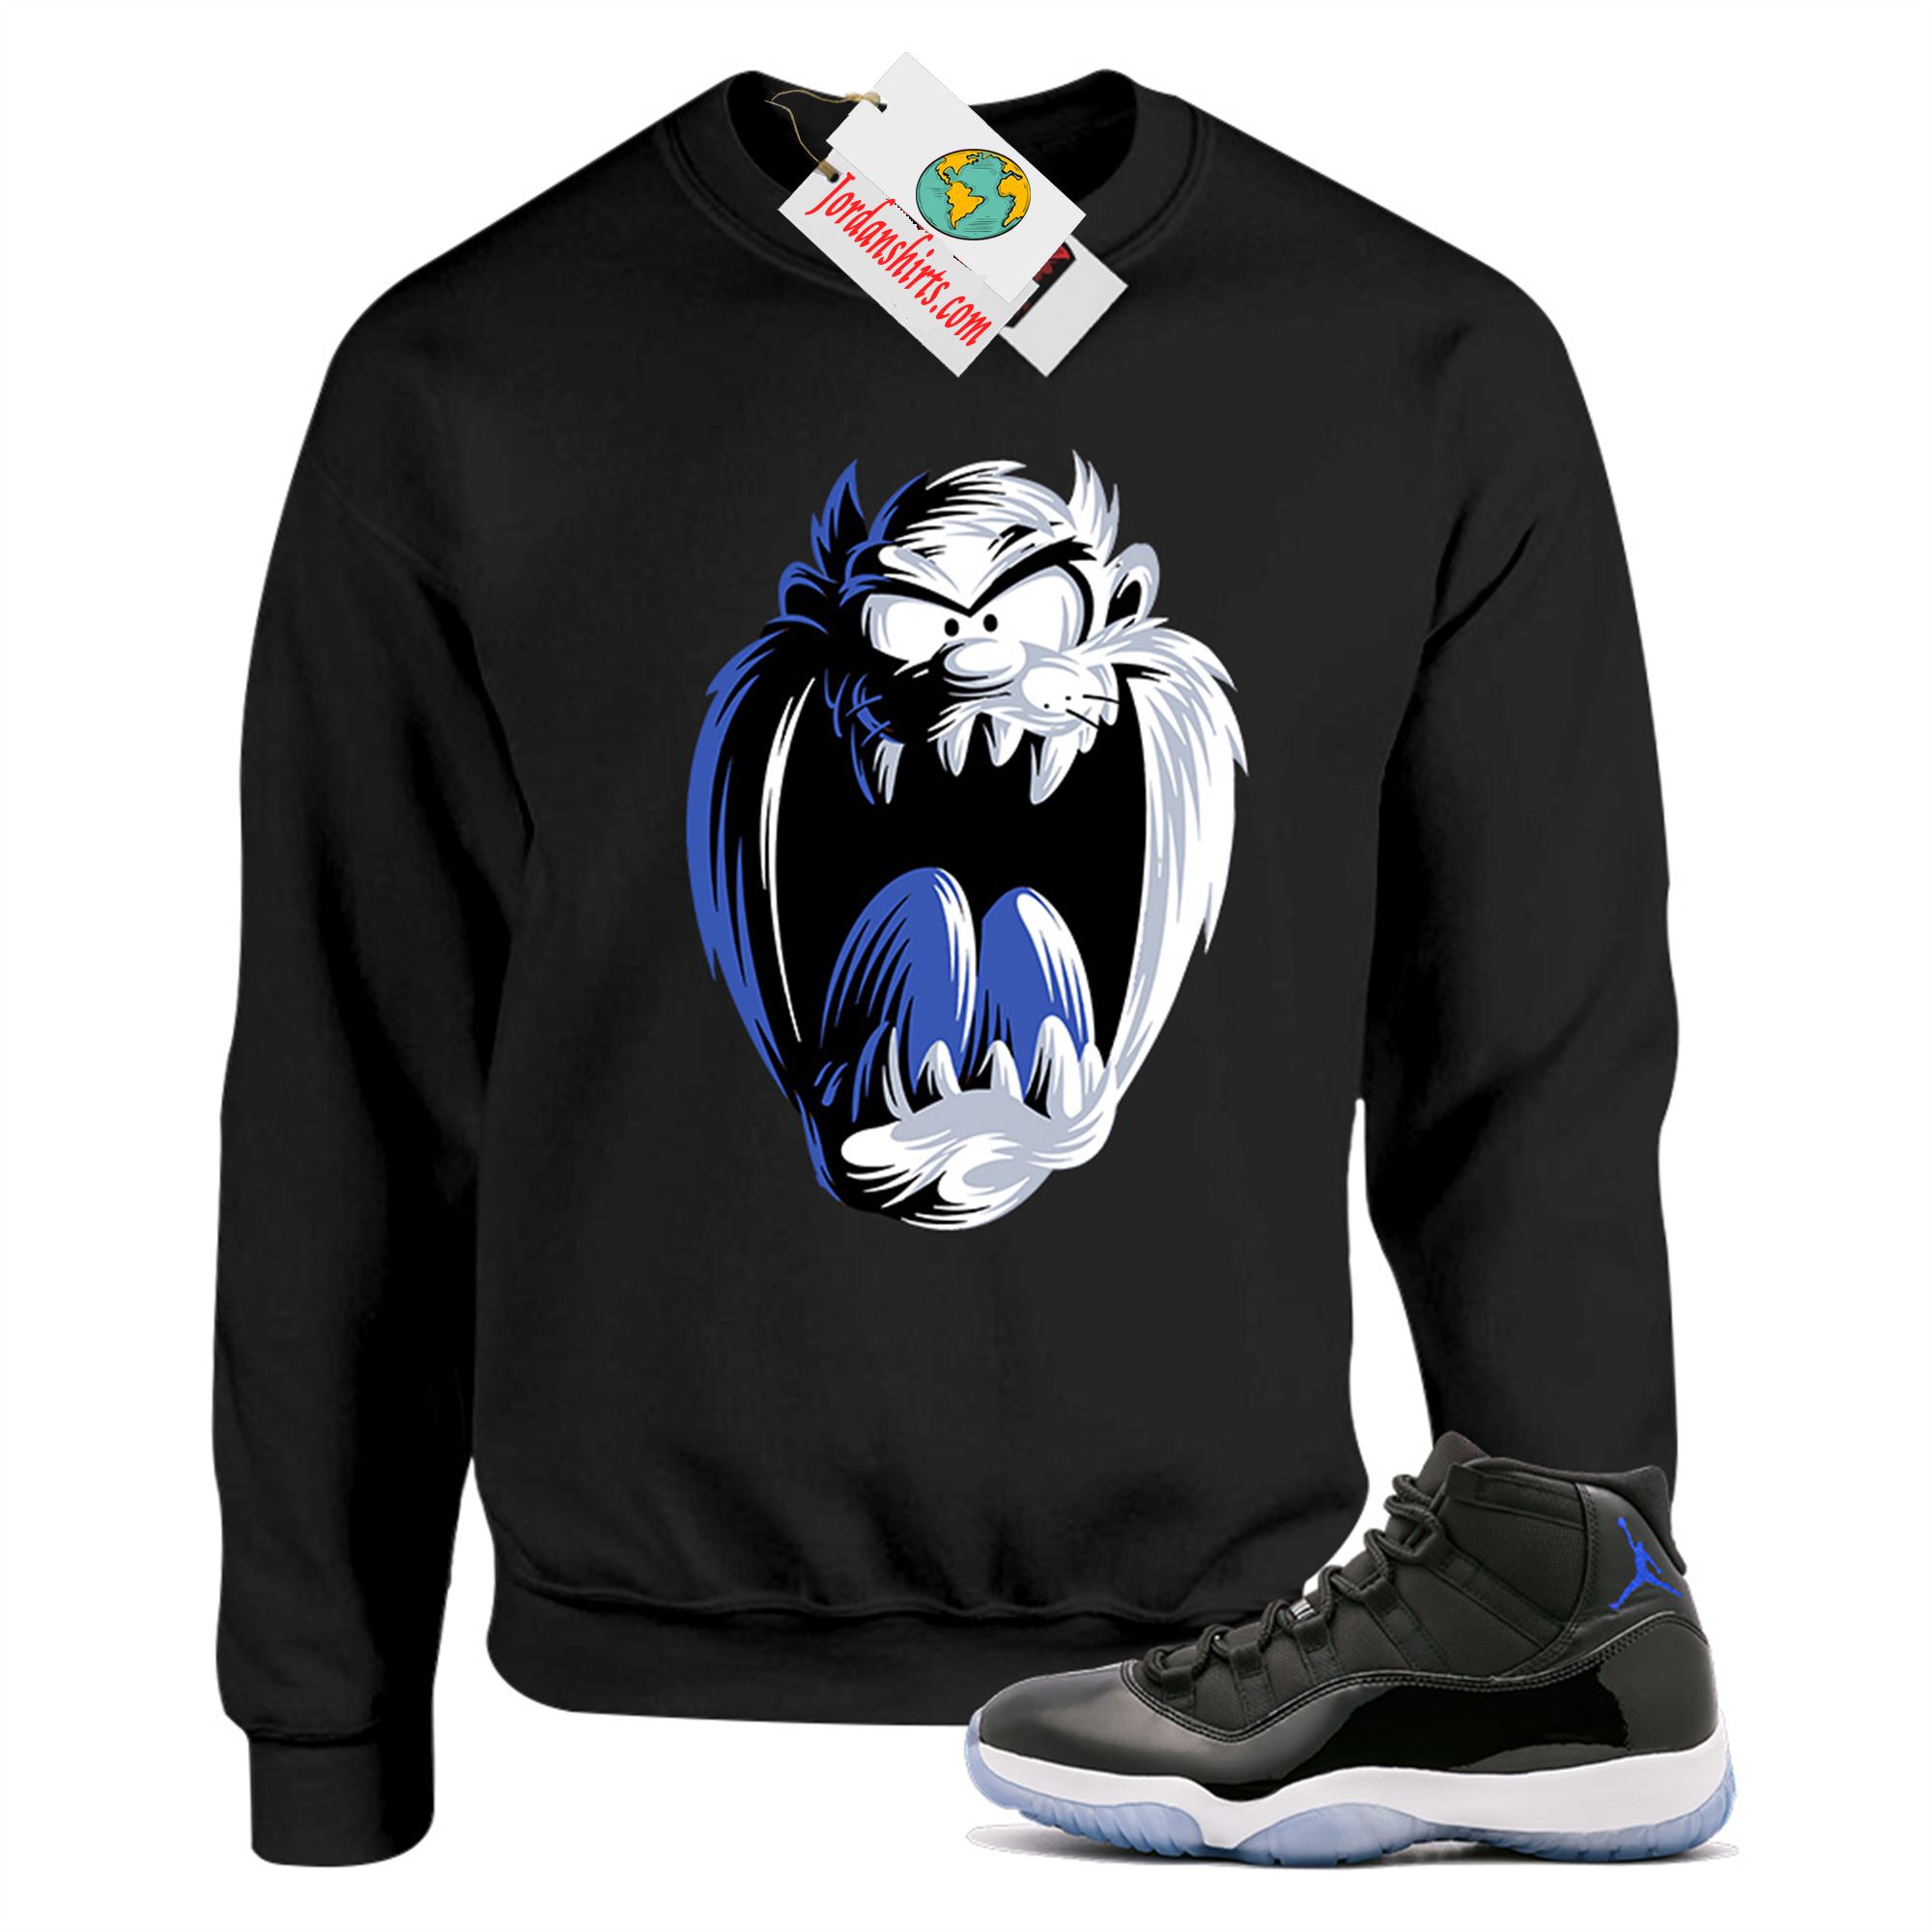 Jordan 11 Sweatshirt, Taz Bunny Black Sweatshirt Air Jordan 11 Space Jam 11s Size Up To 5xl